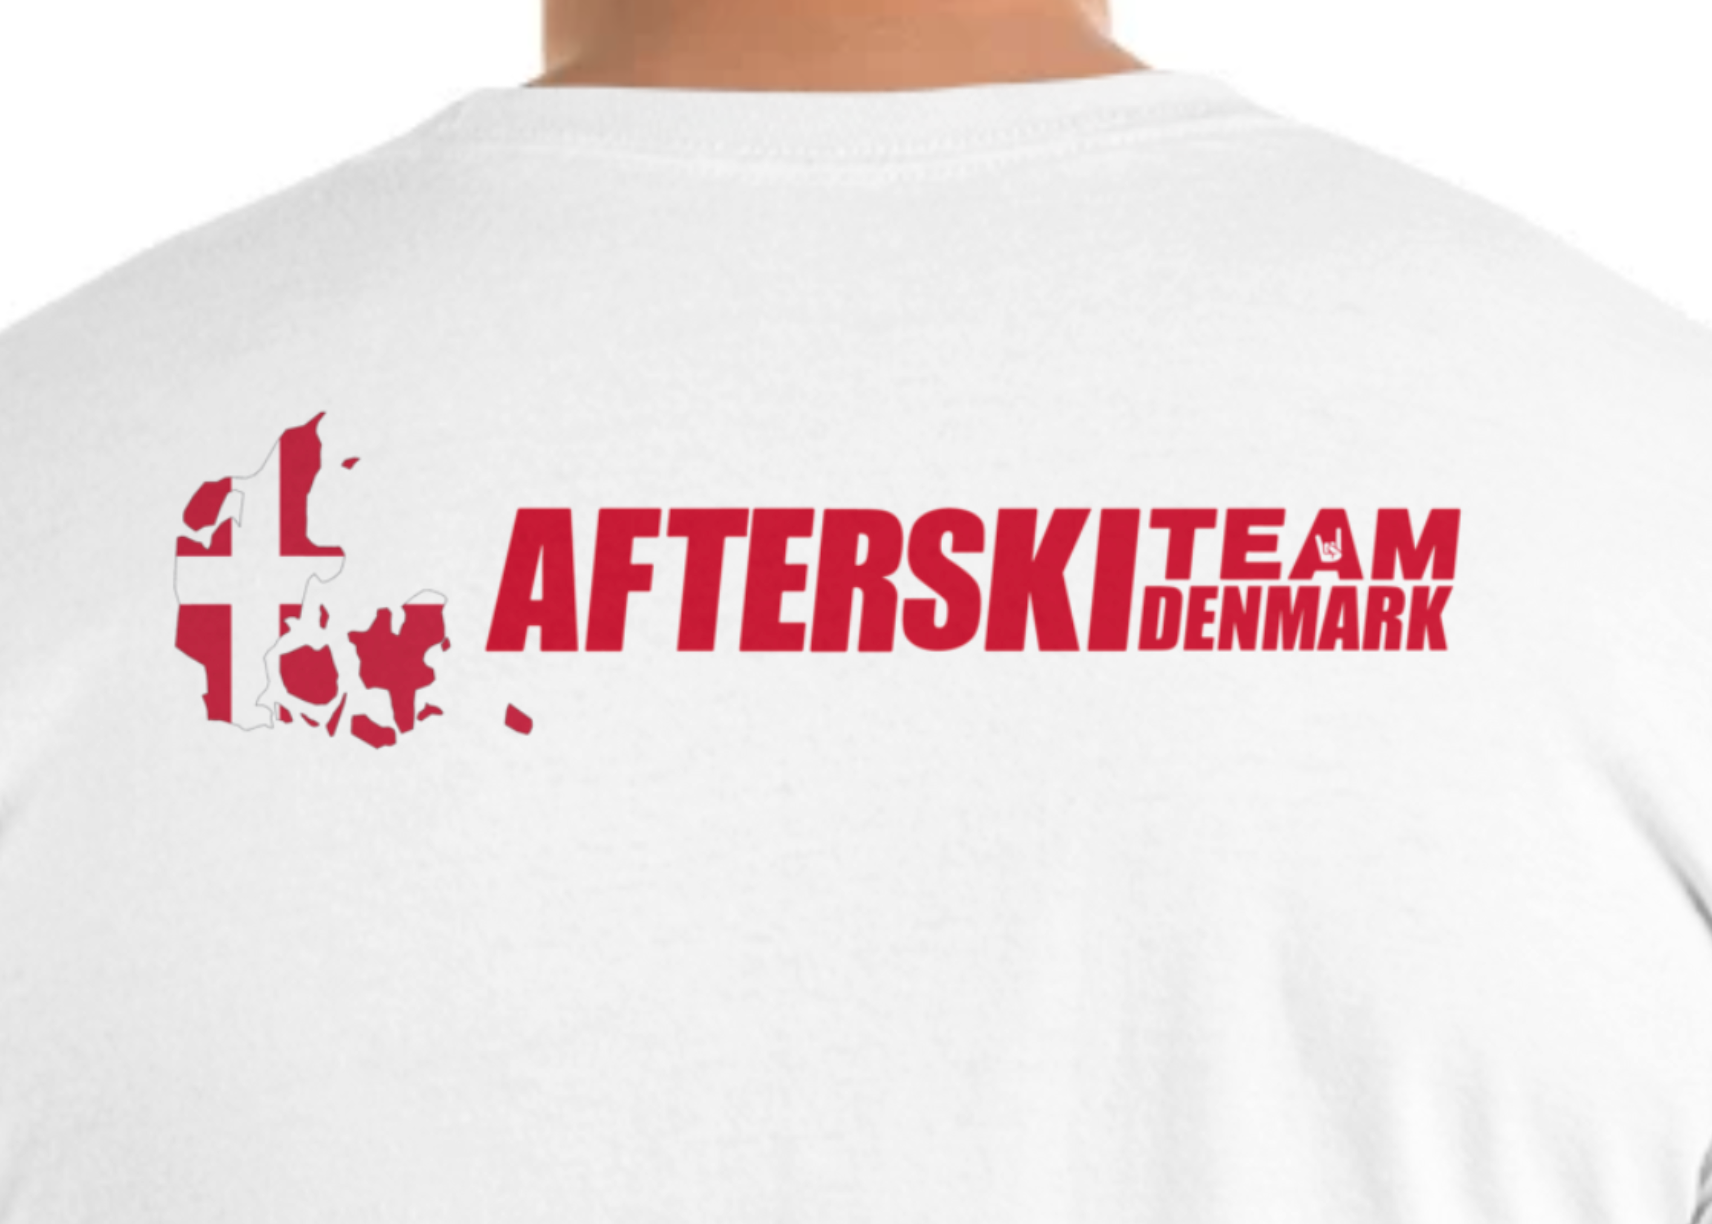 Afterski Team Denmark - Men’s Long Sleeve T-Shirt